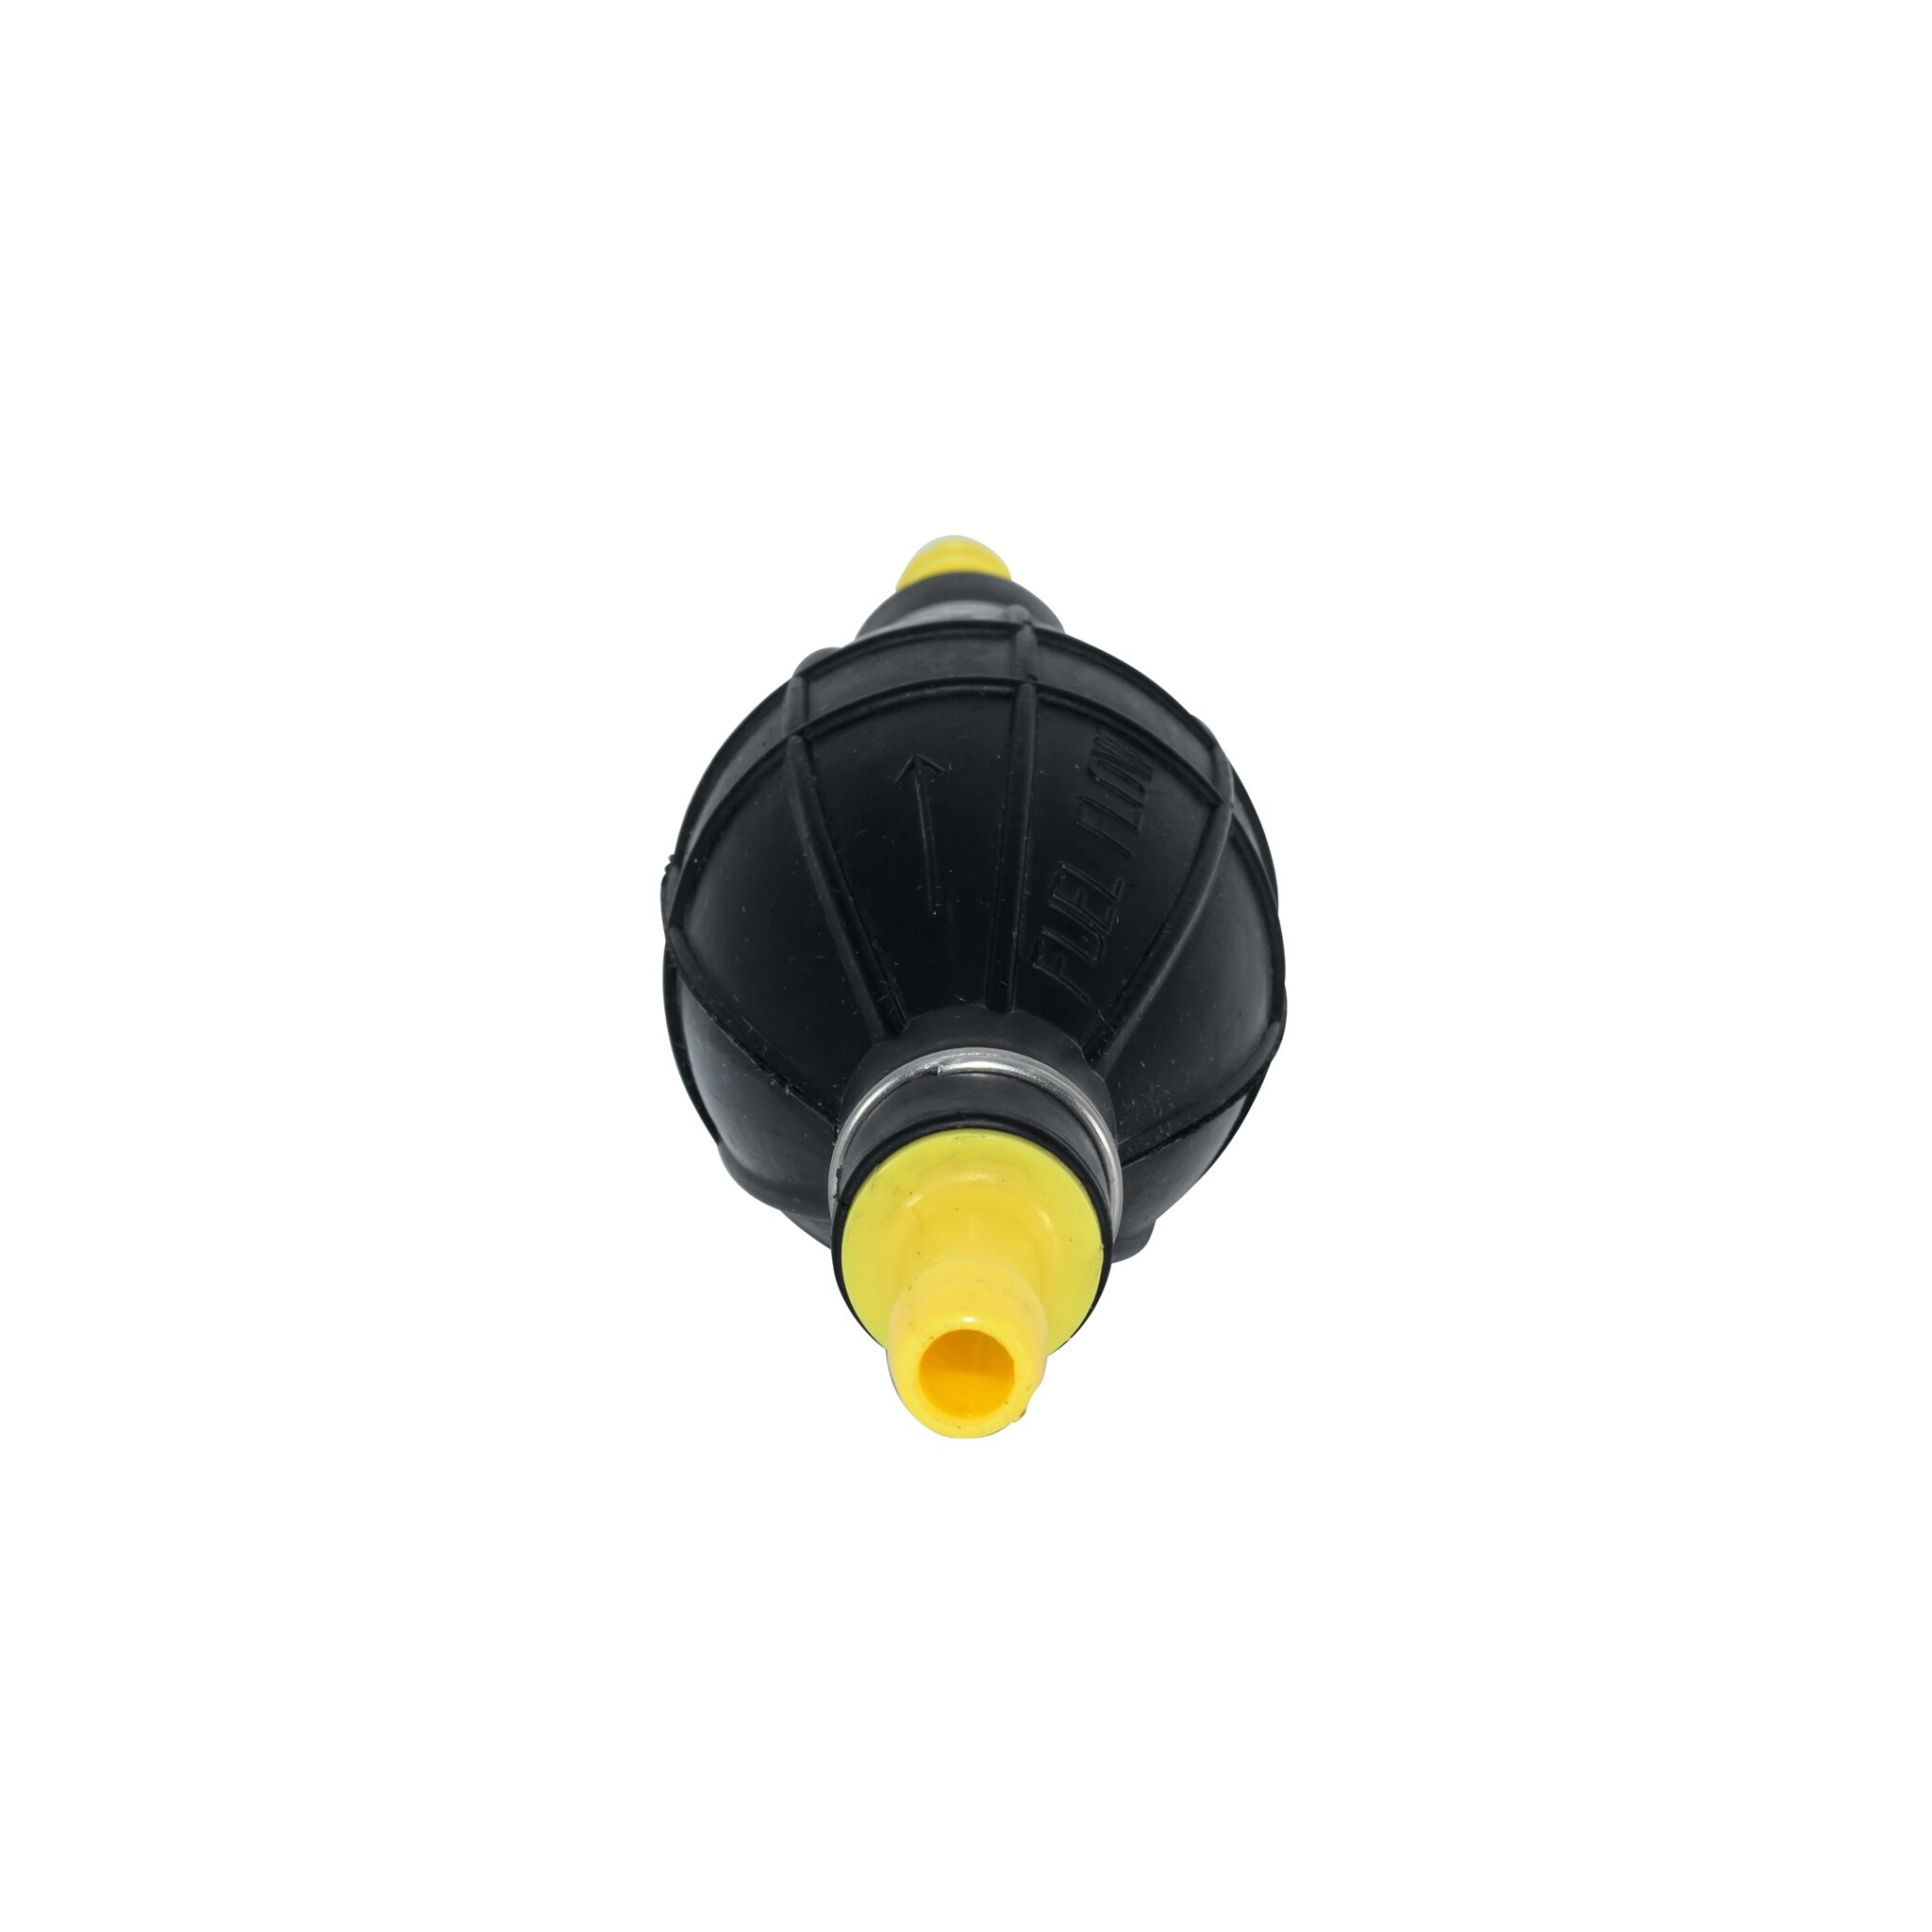 Pump ball with valve